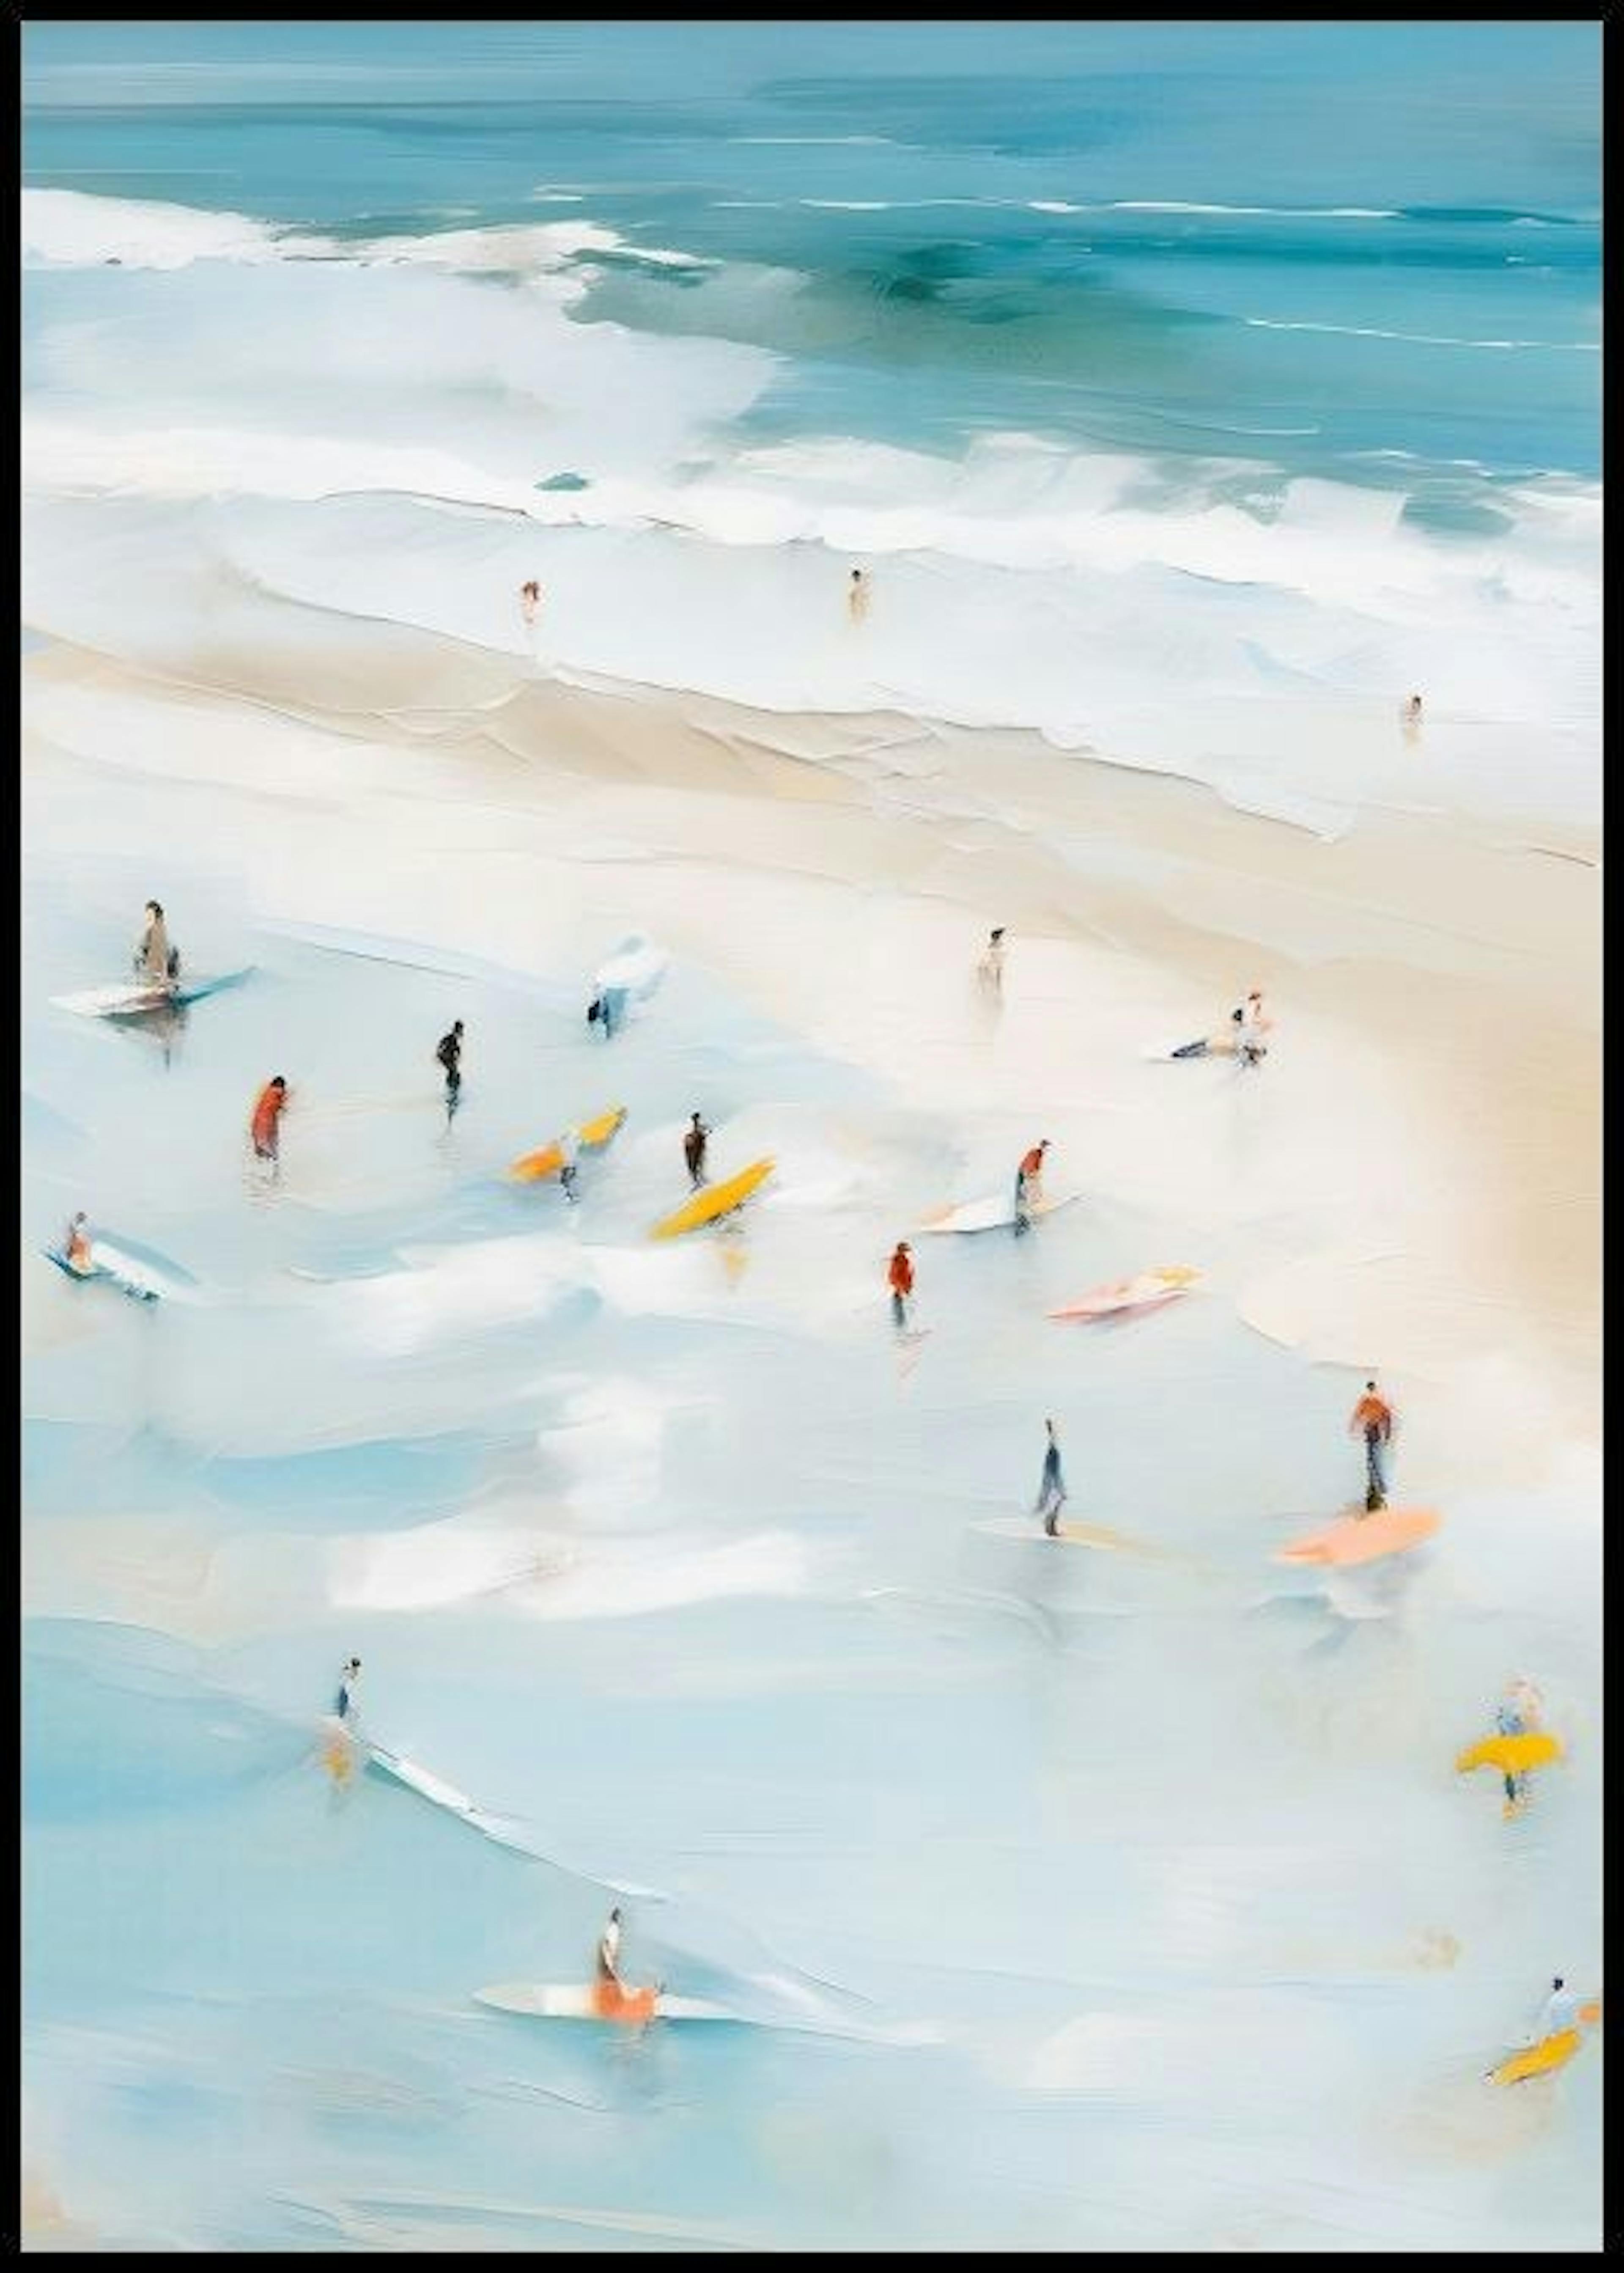 Paradiso dei Surfisti Poster 0